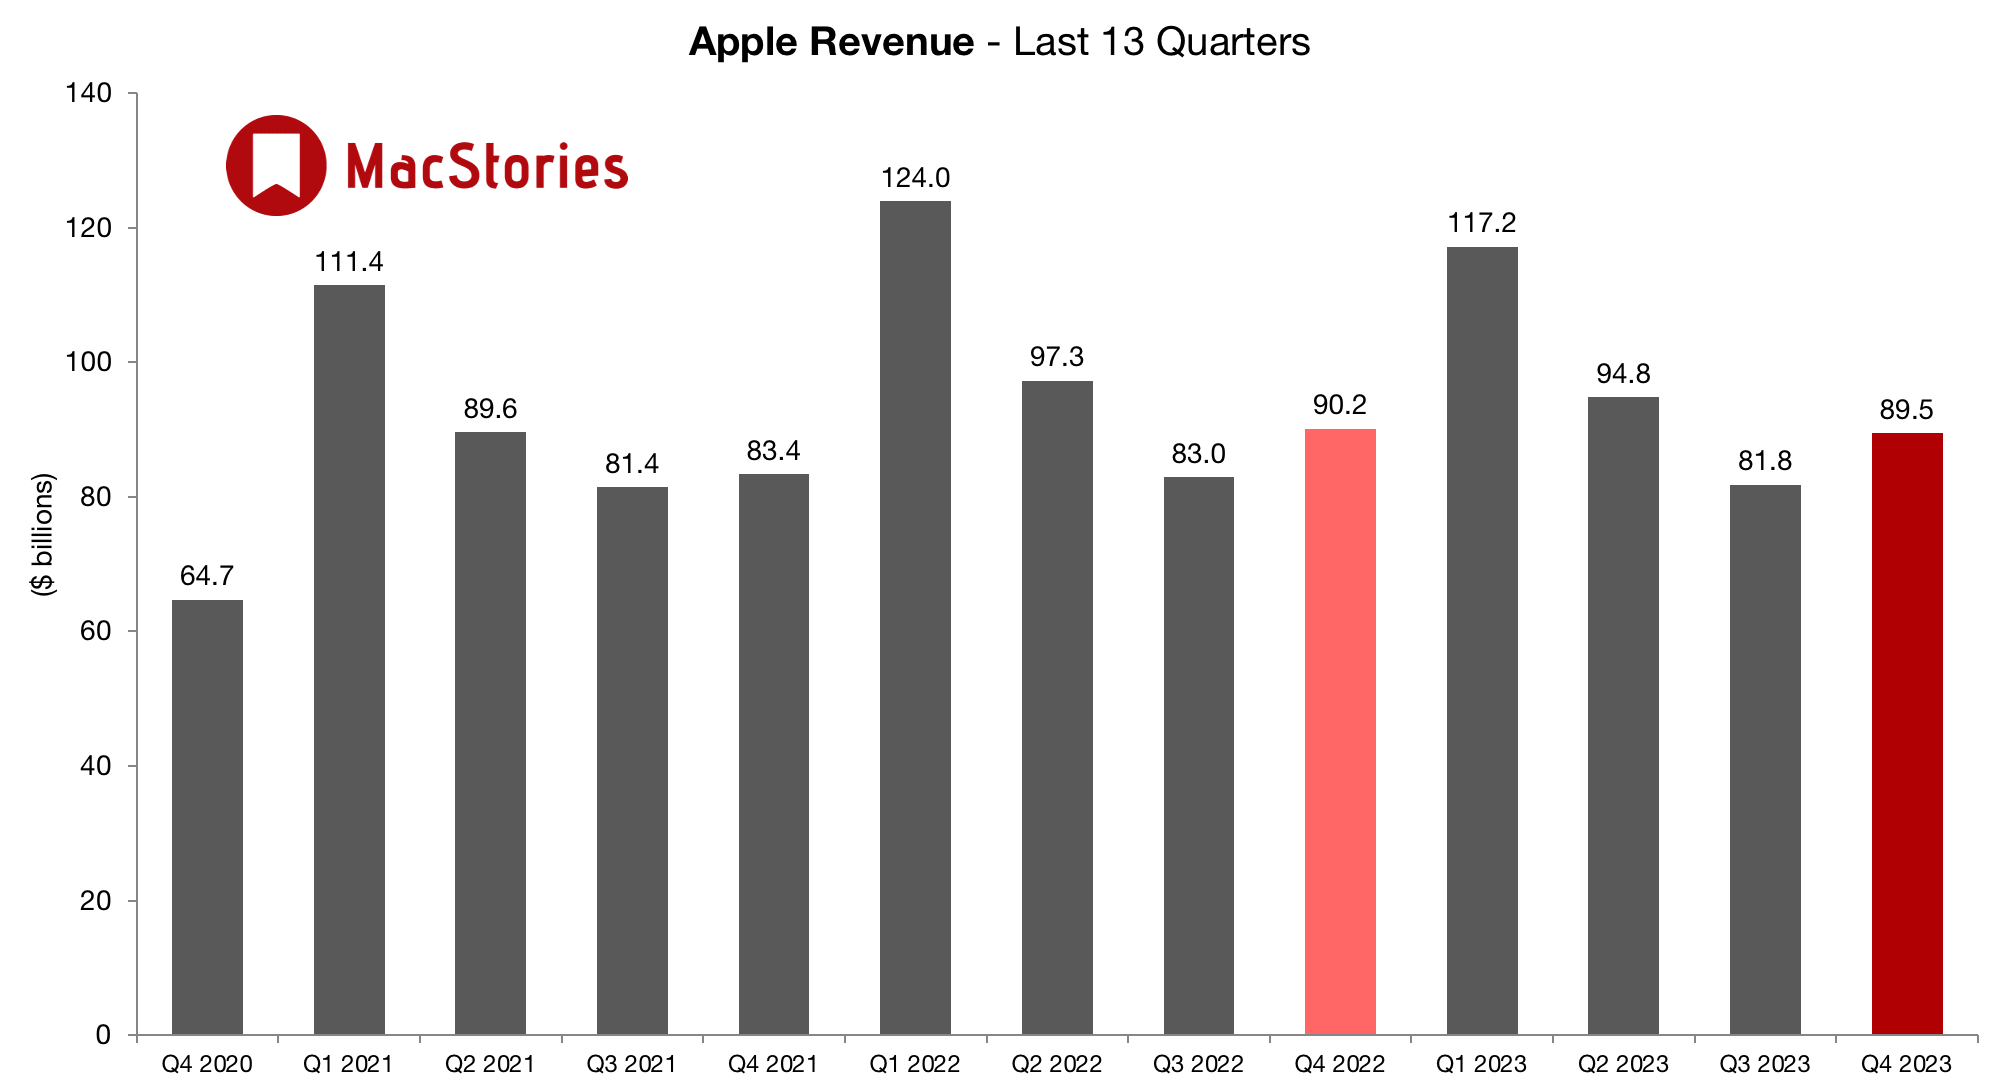 Apple's quarterly revenue for the past 13 quarters.